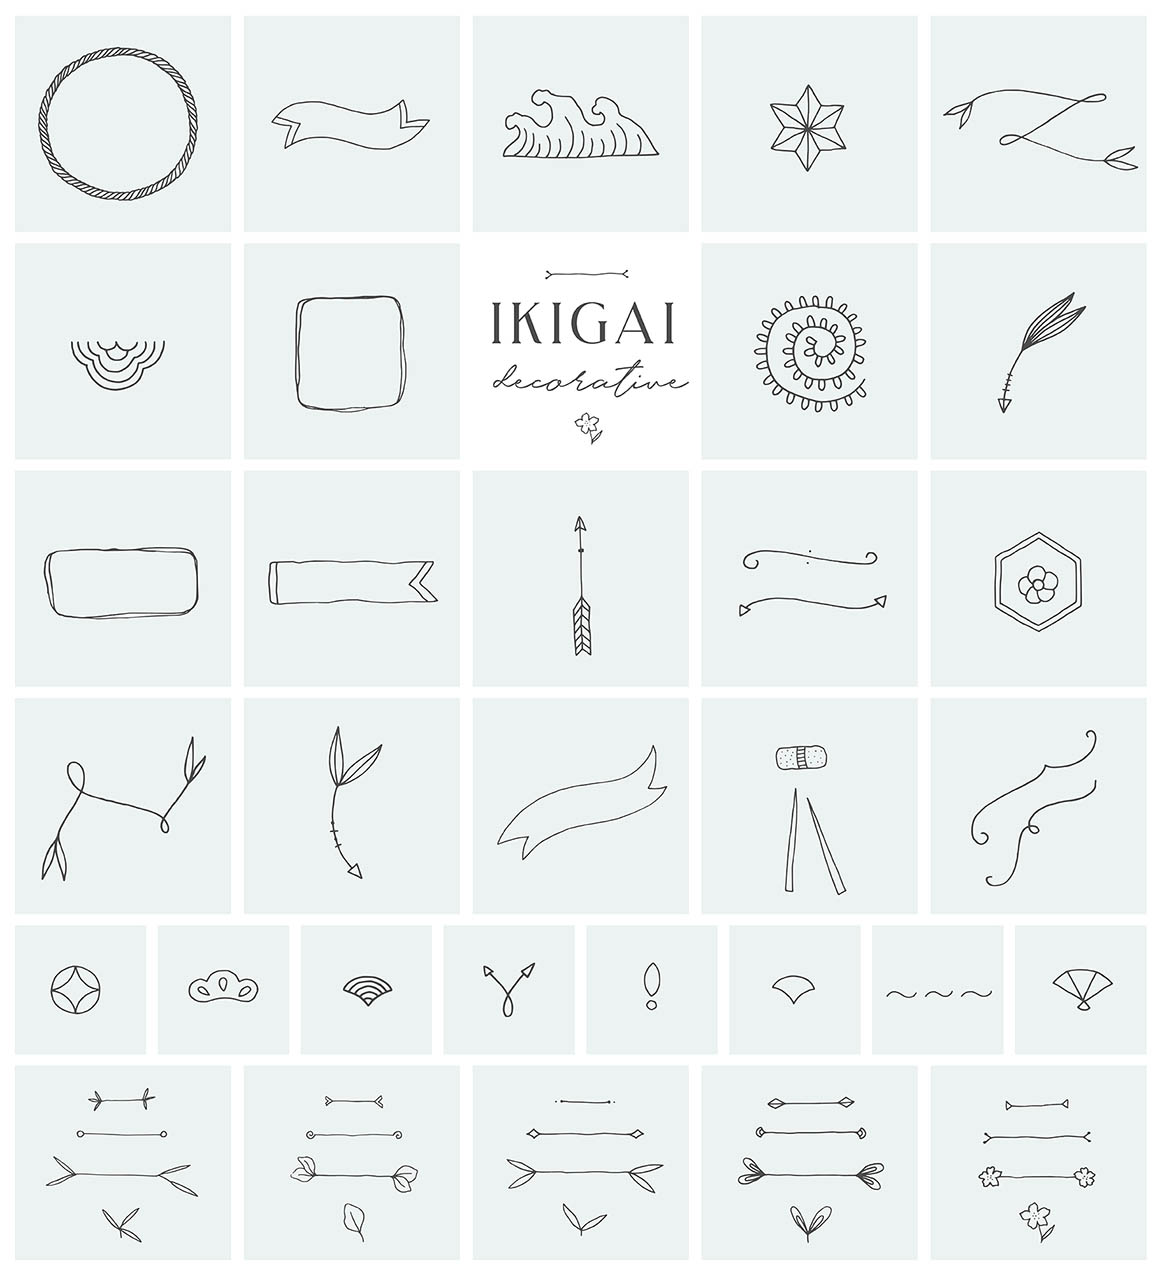 ikigai-main-image4.jpg